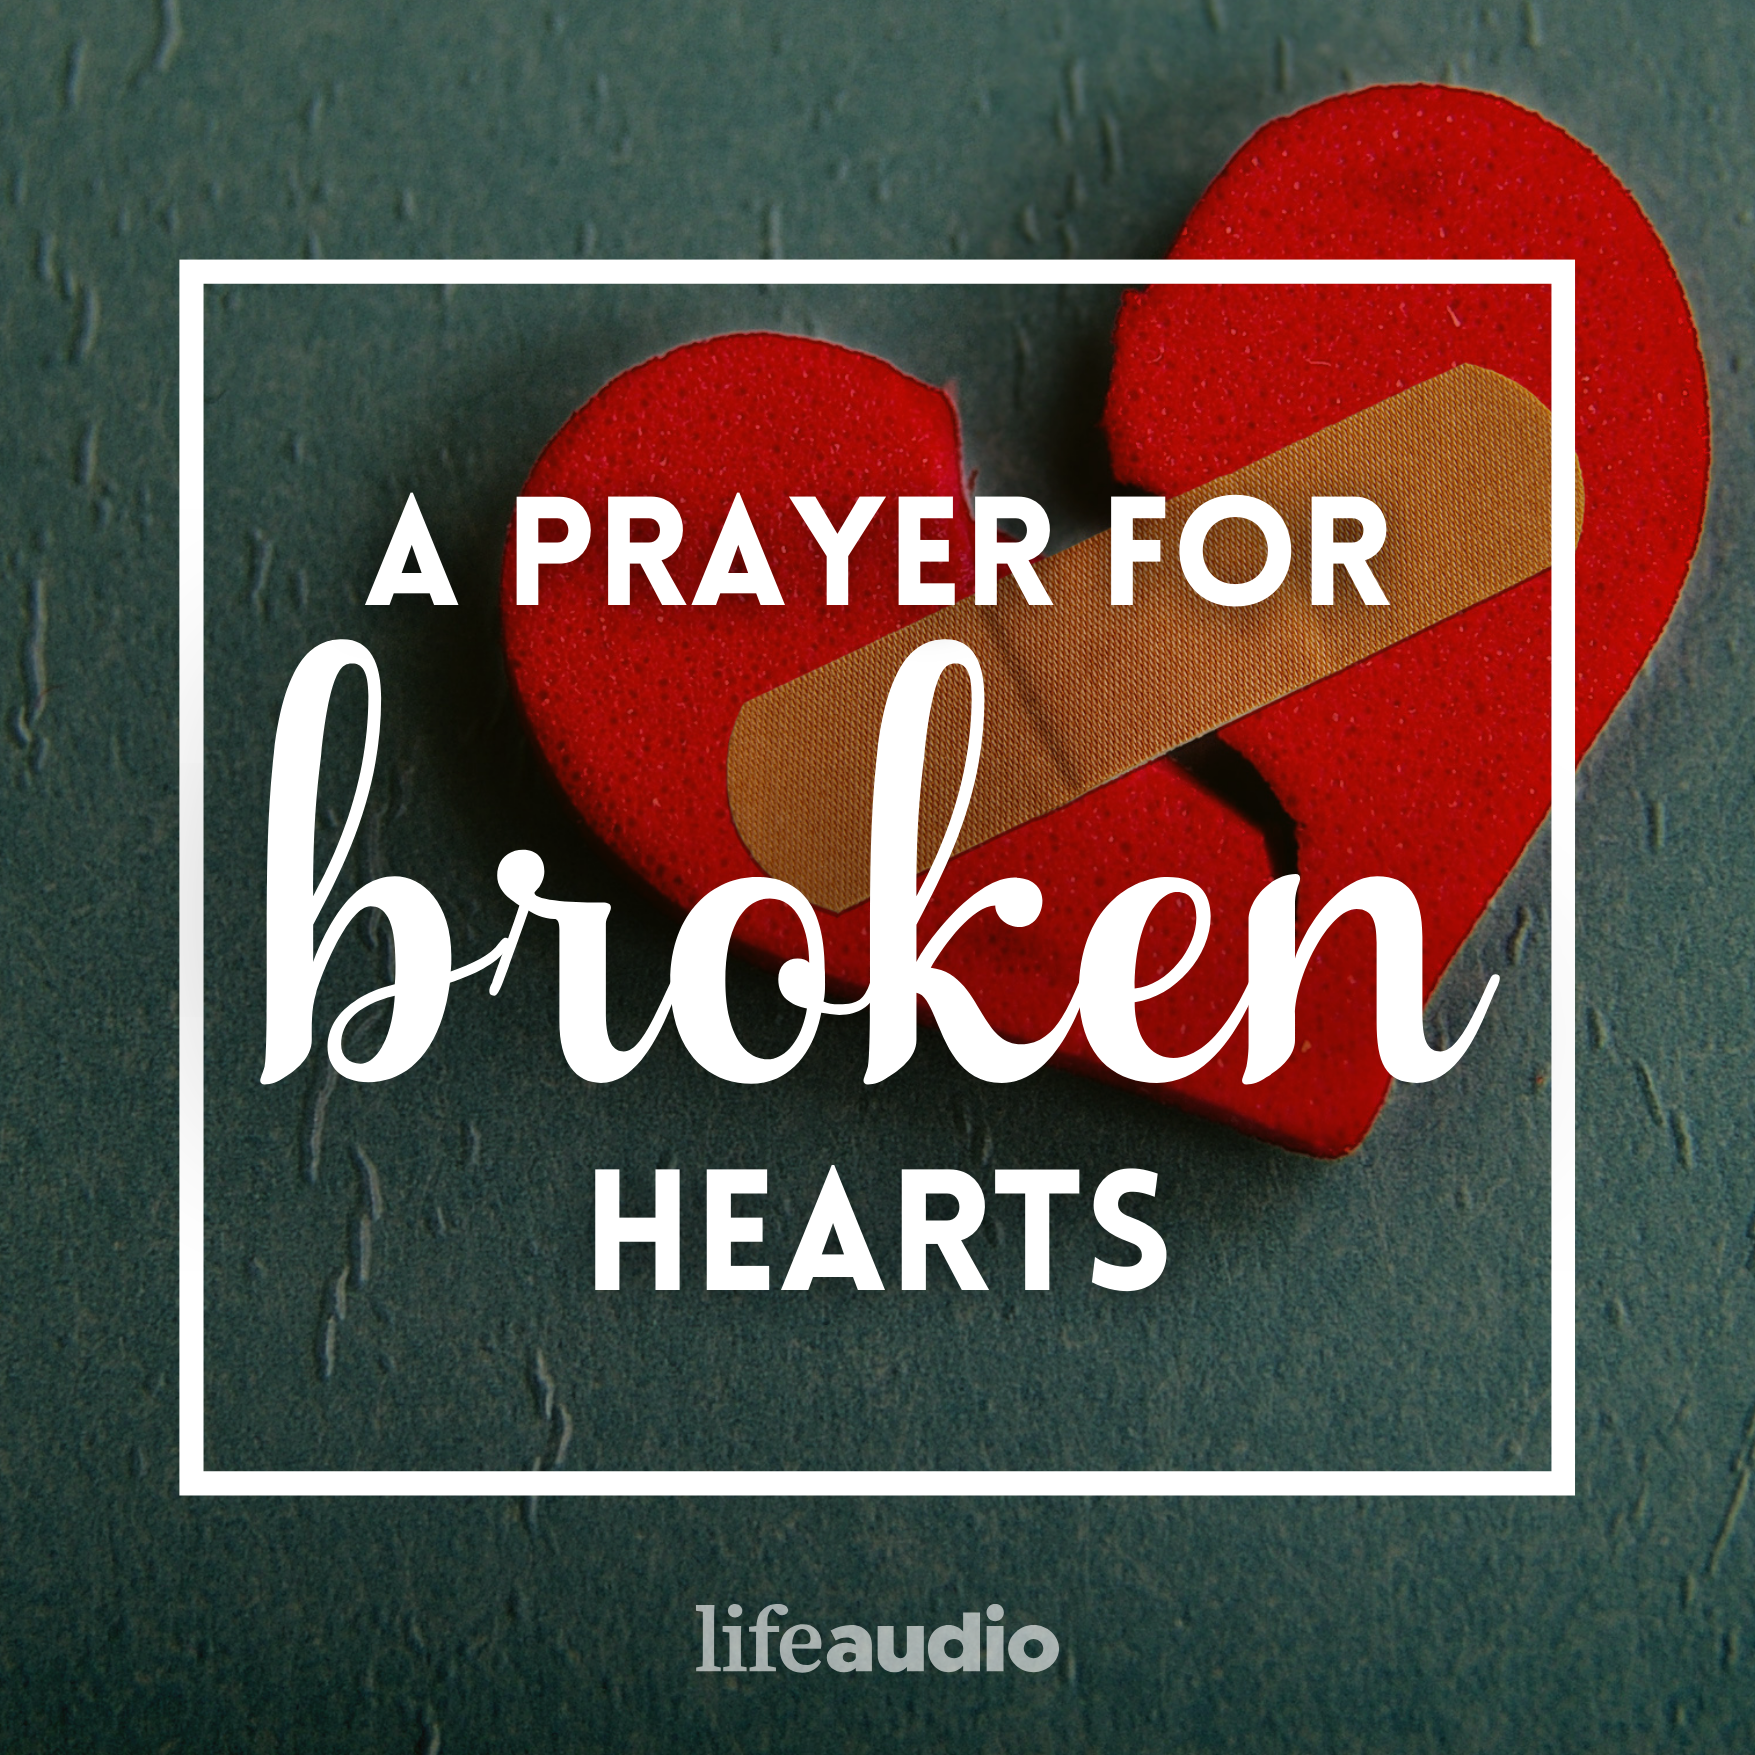 A Prayer for Broken Hearts